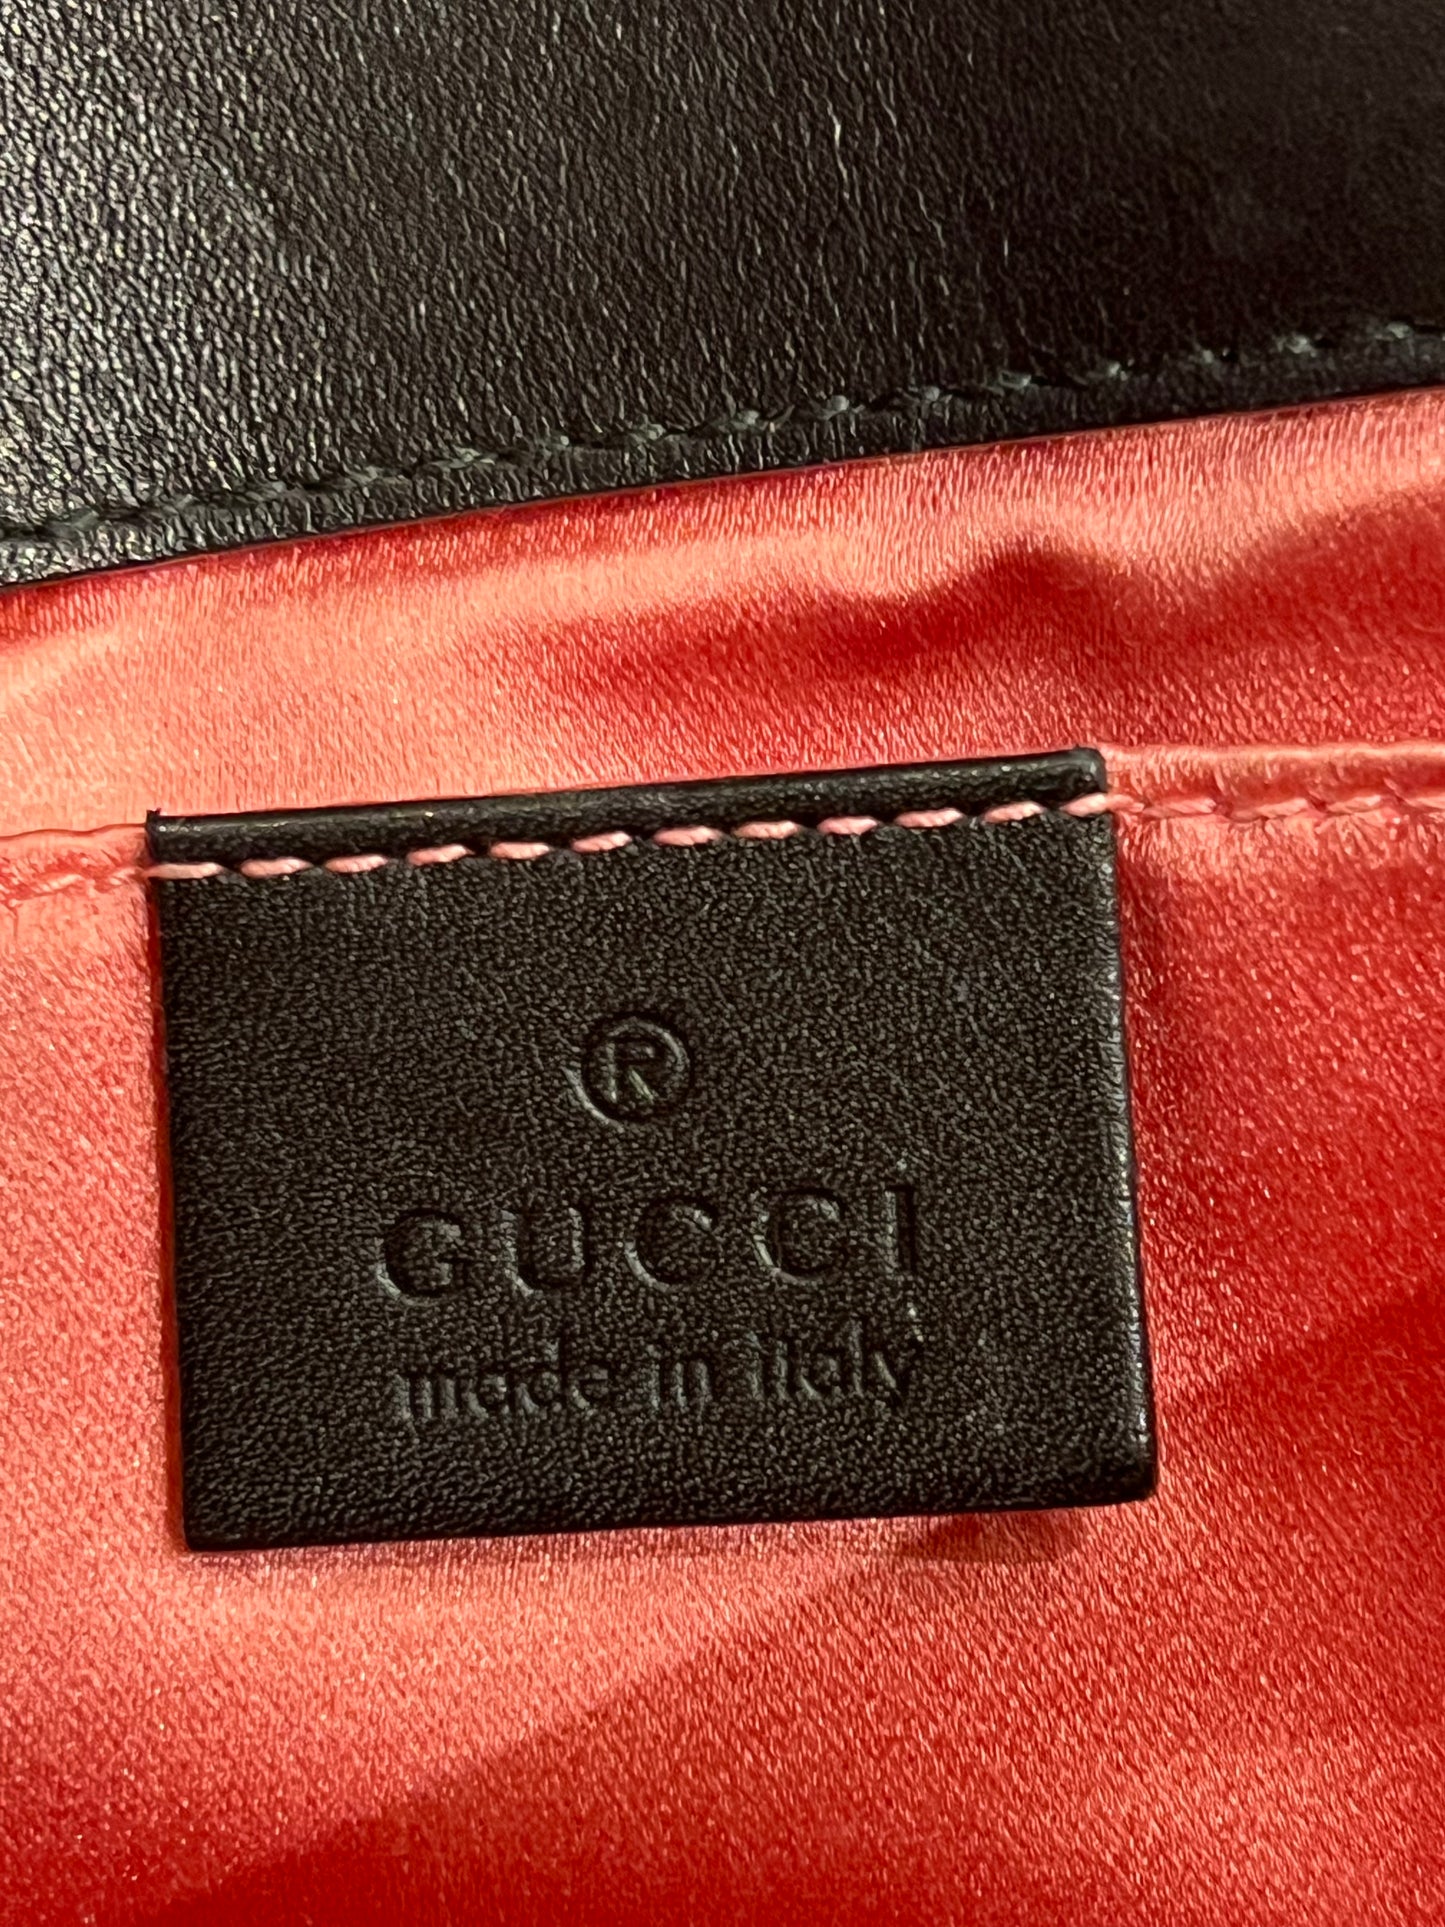 Gucci Marmont black velvet